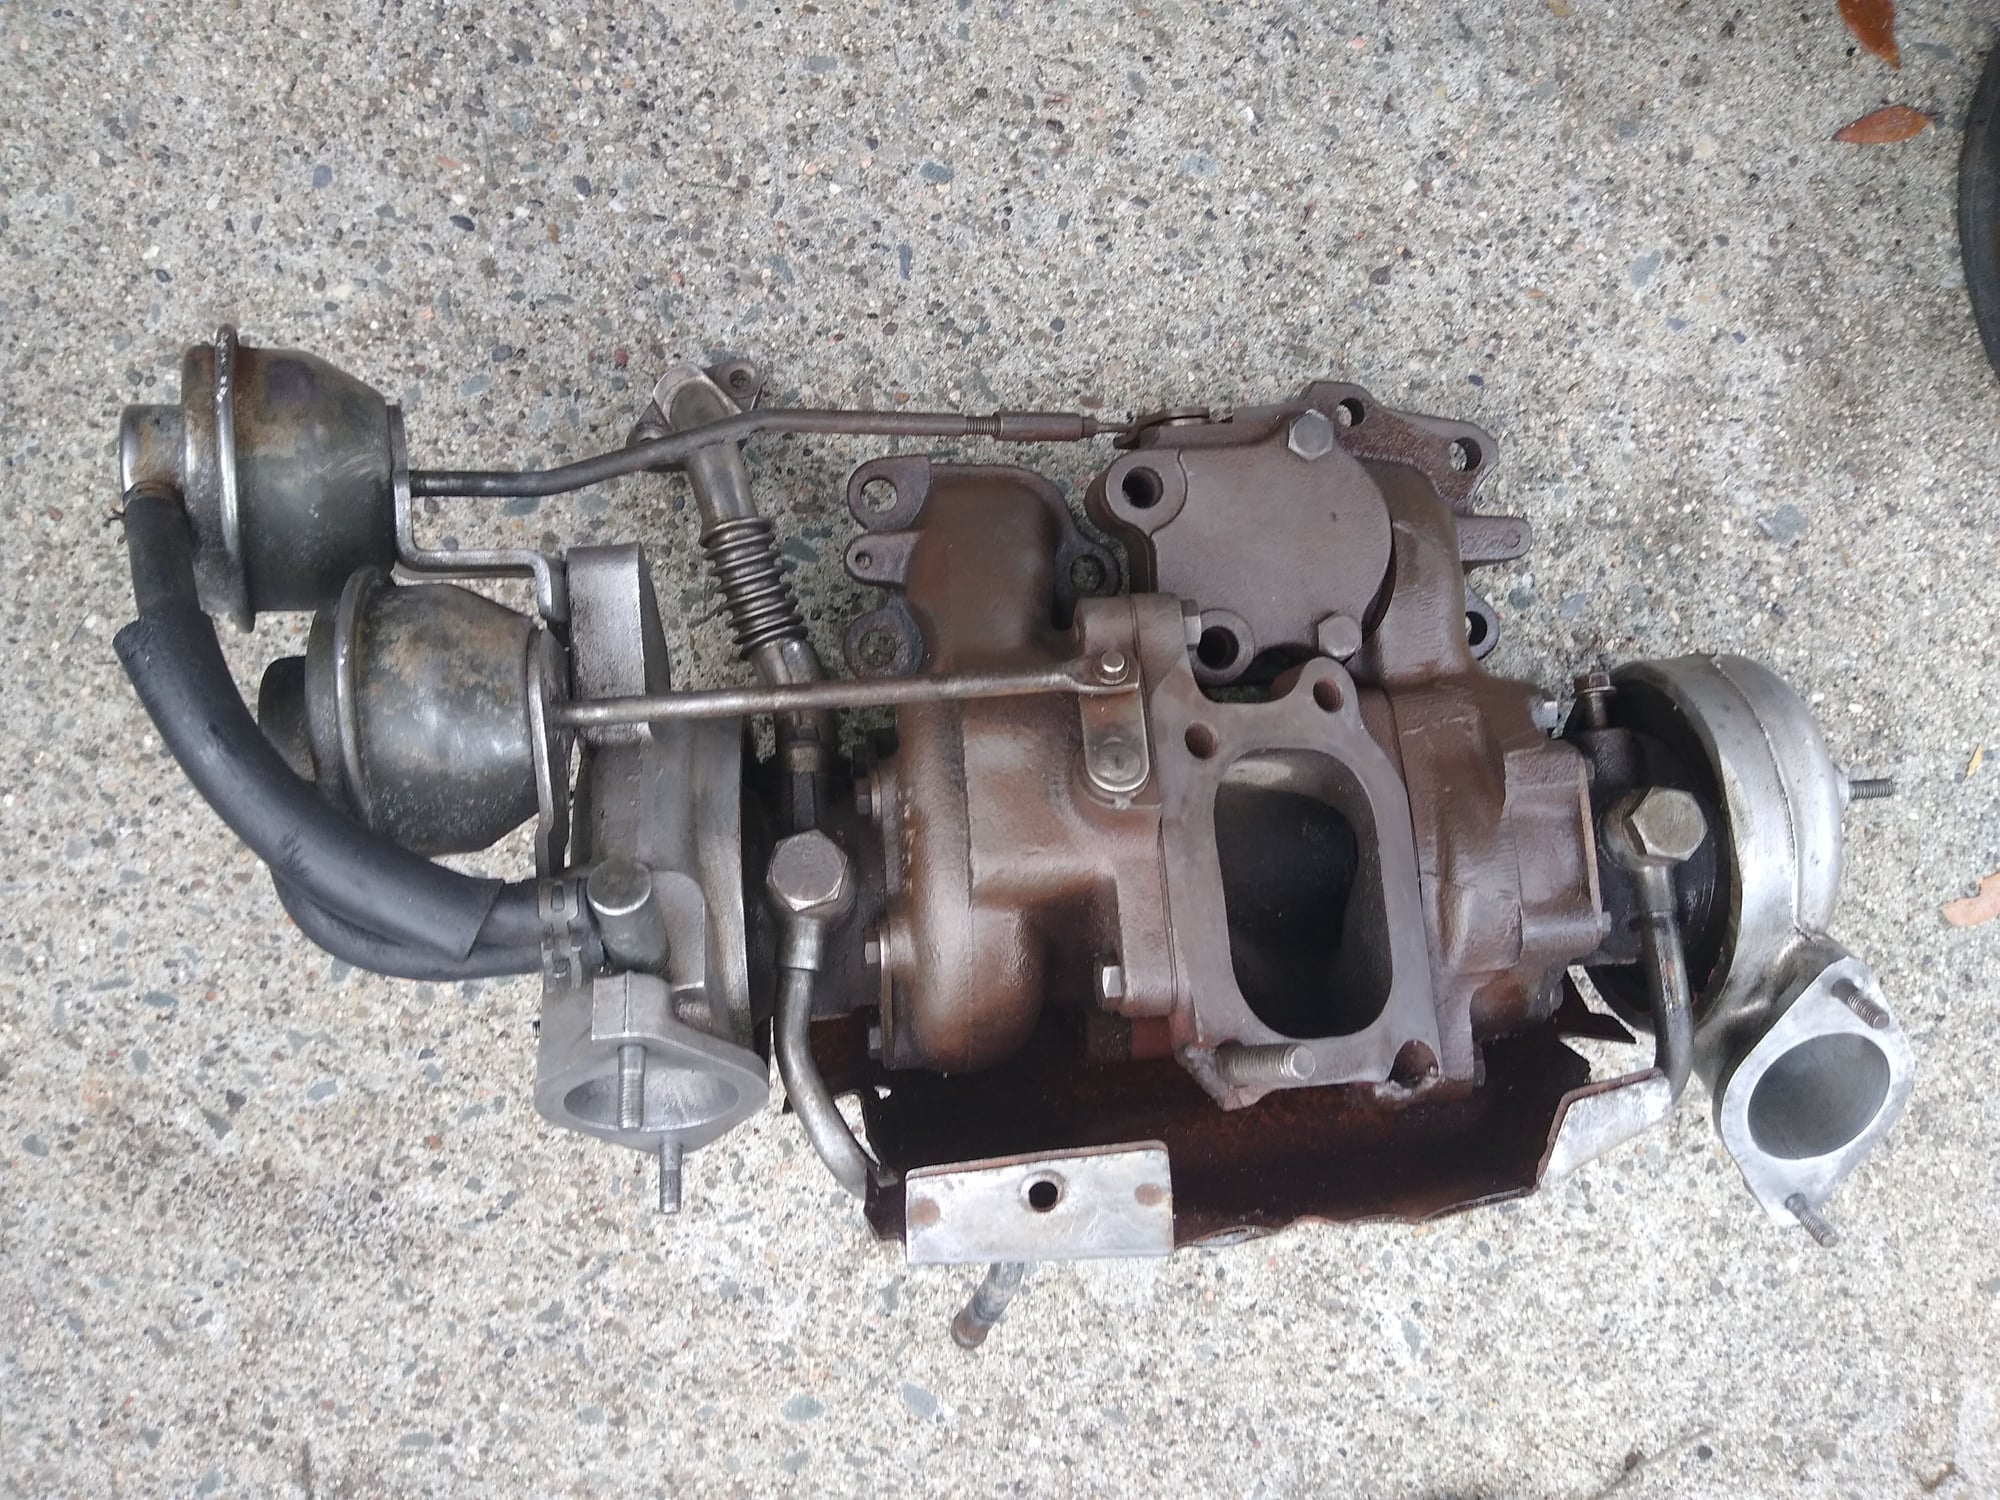 Engine - Internals - FD - OEM Twin Turbo Manifold - Used - 1993 to 1995 Mazda RX-7 - San Jose, CA 95121, United States